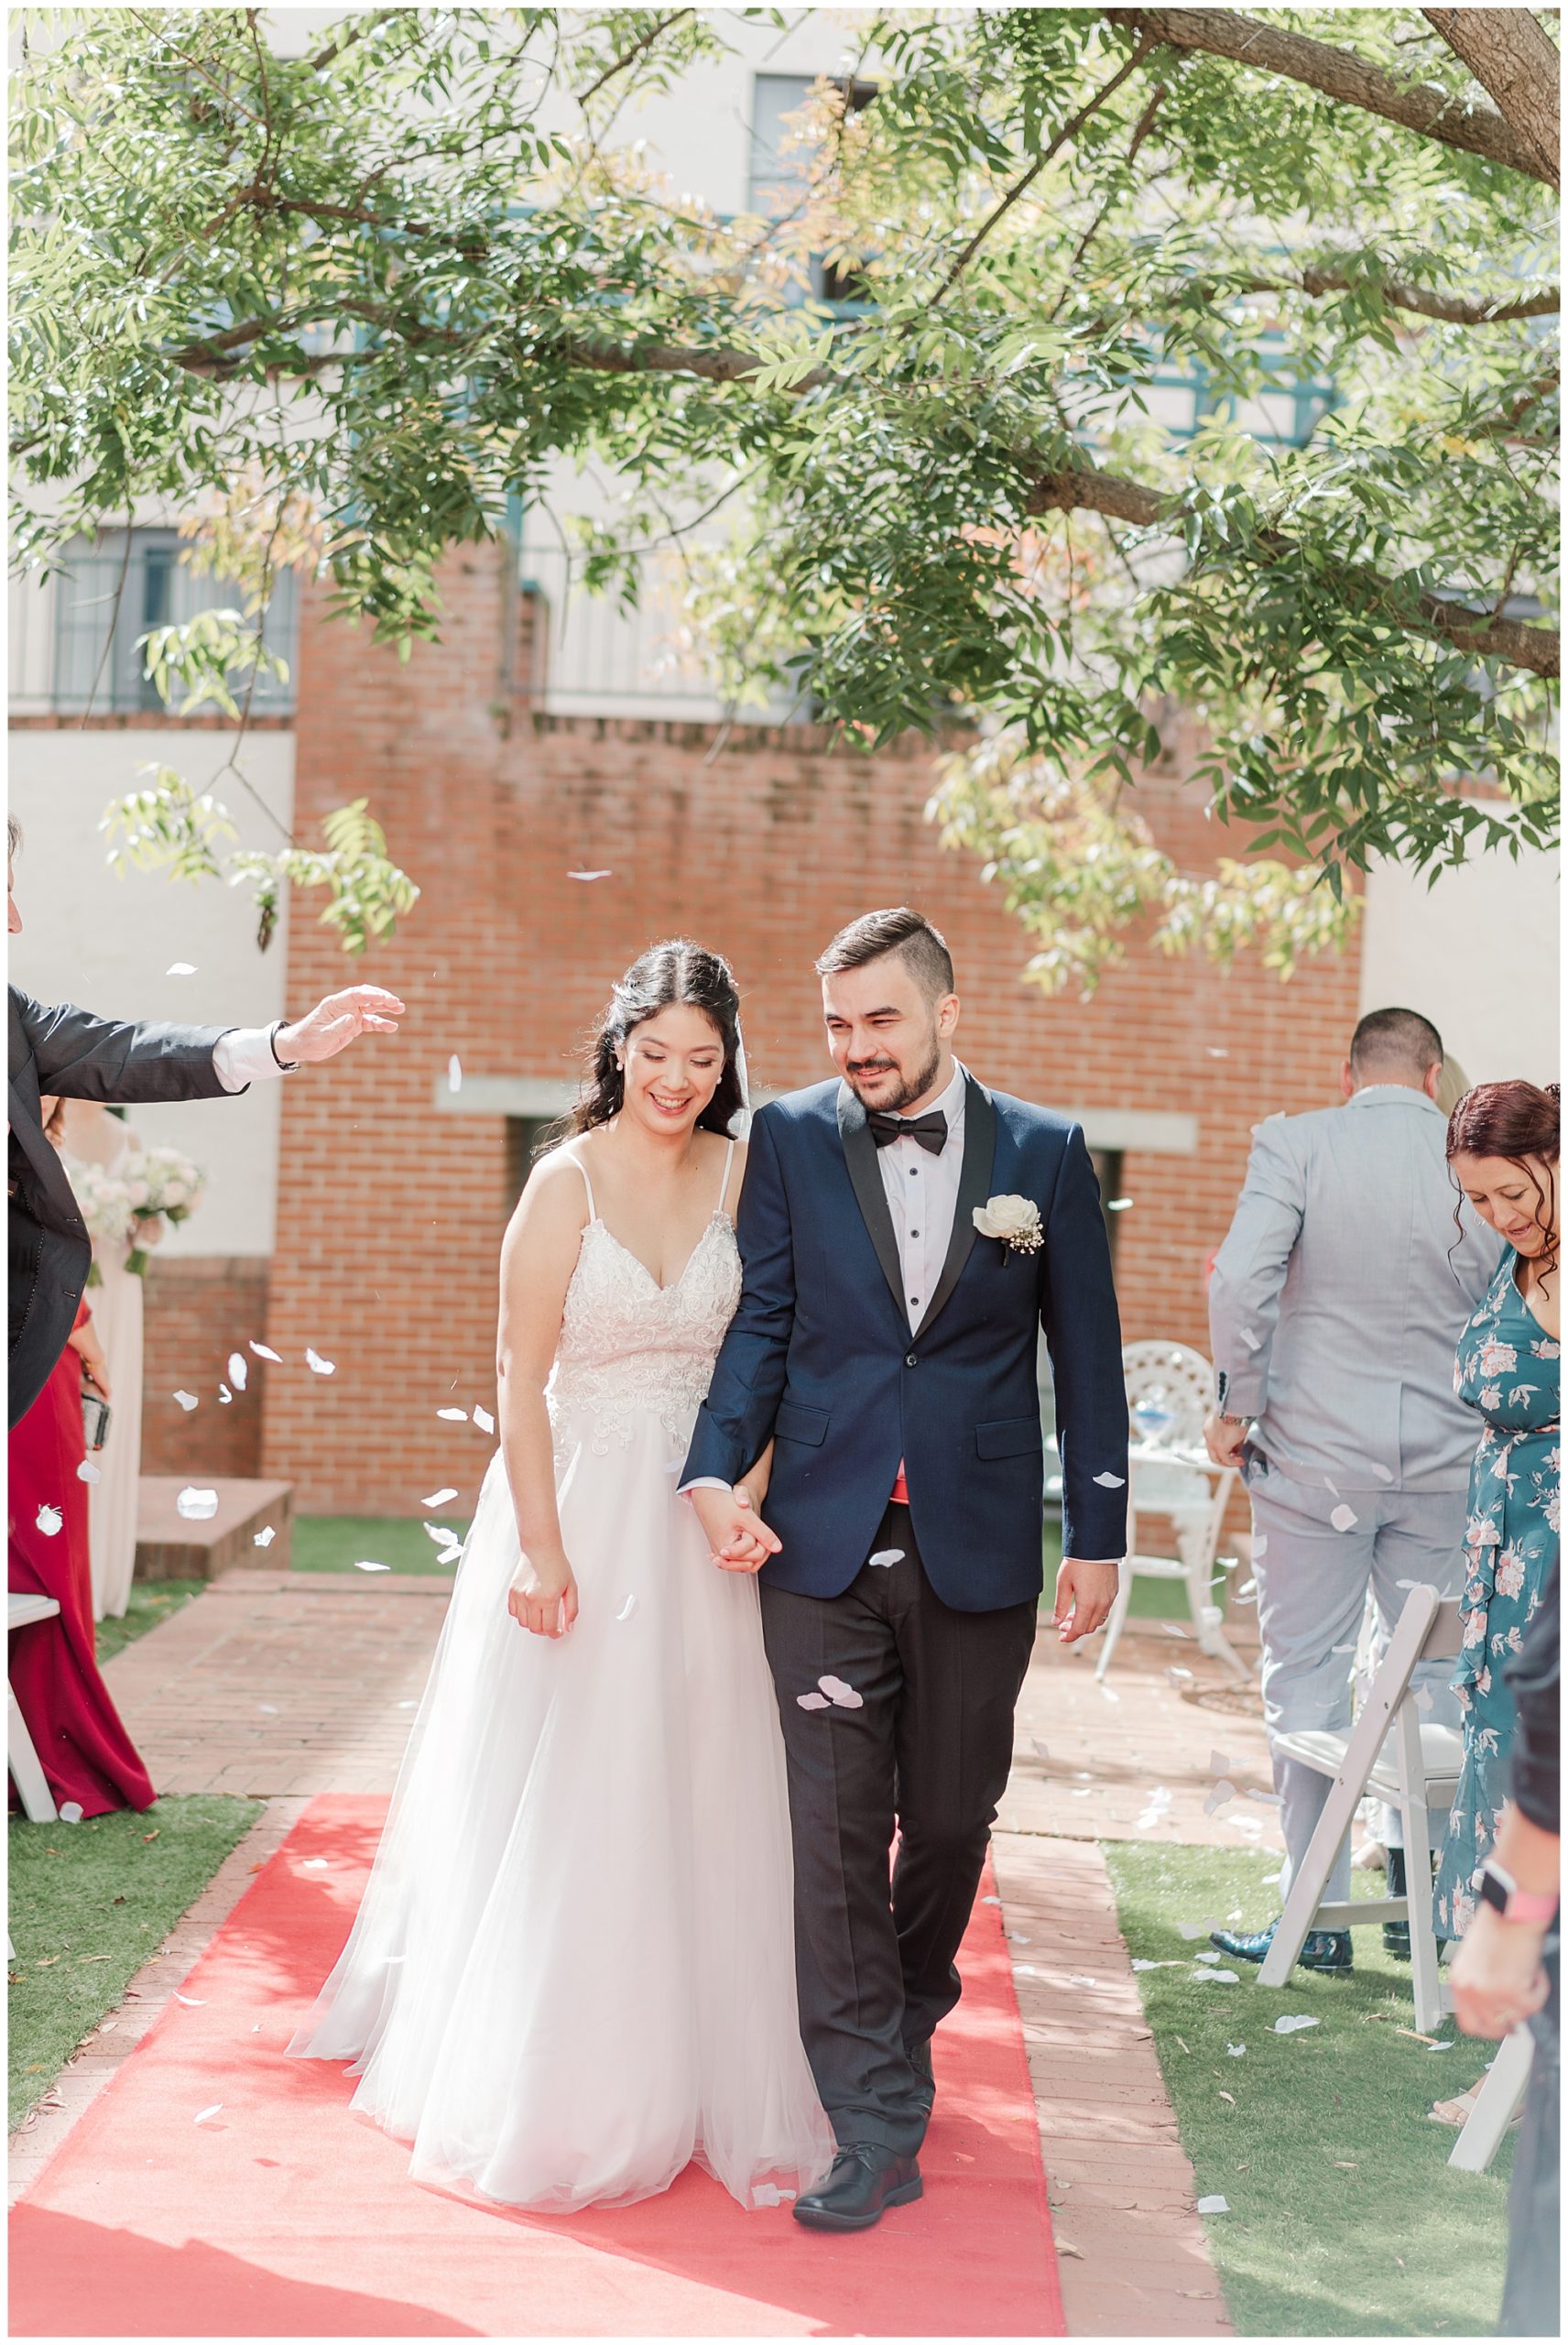 Laughing bride and groom | wedding photographer australia